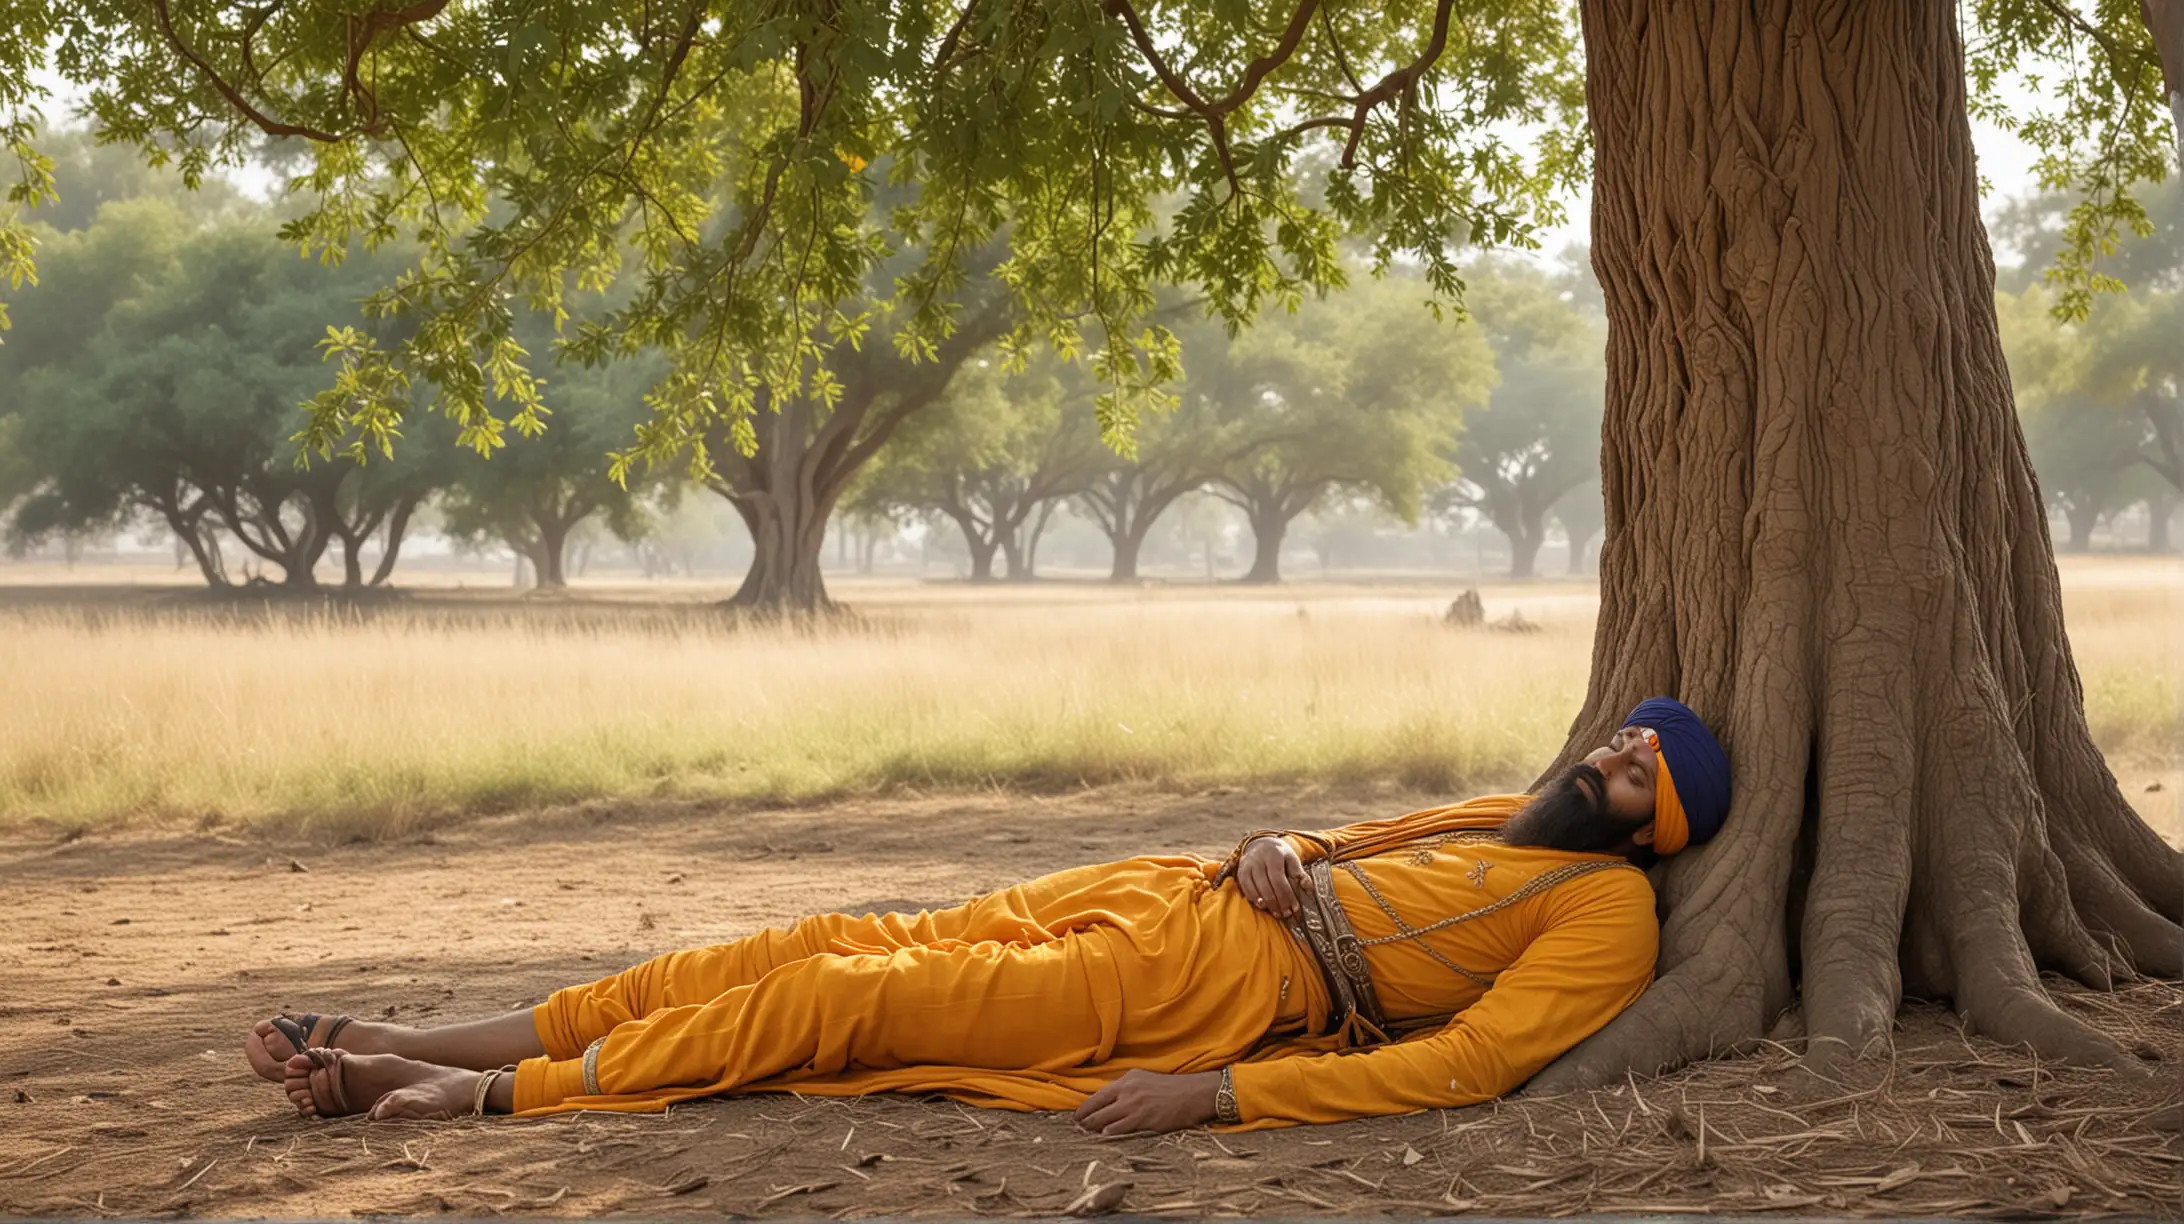 sikh warrior sleeping under a tree